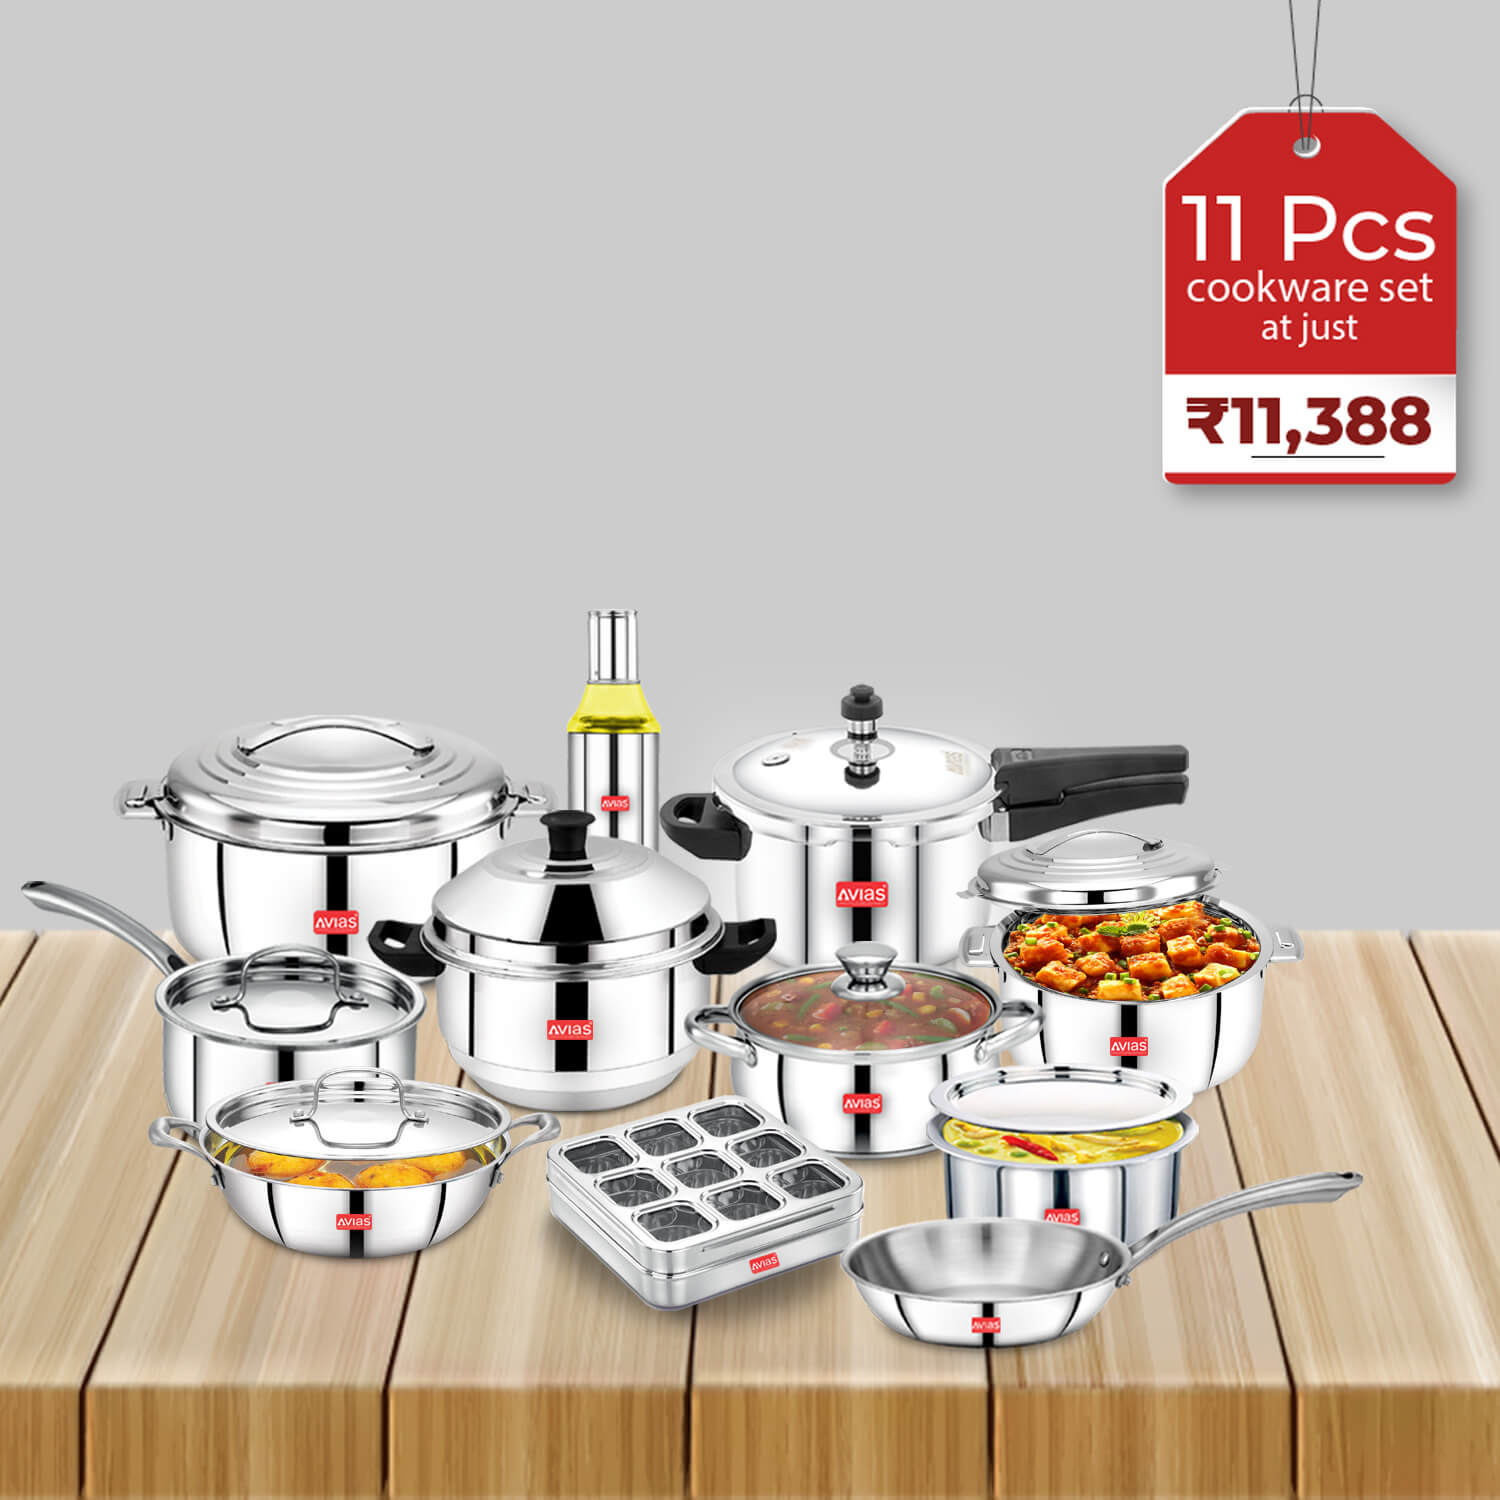 Stainless Steel 11 PCS Kitchen set | Premium | High grade and Premium quality